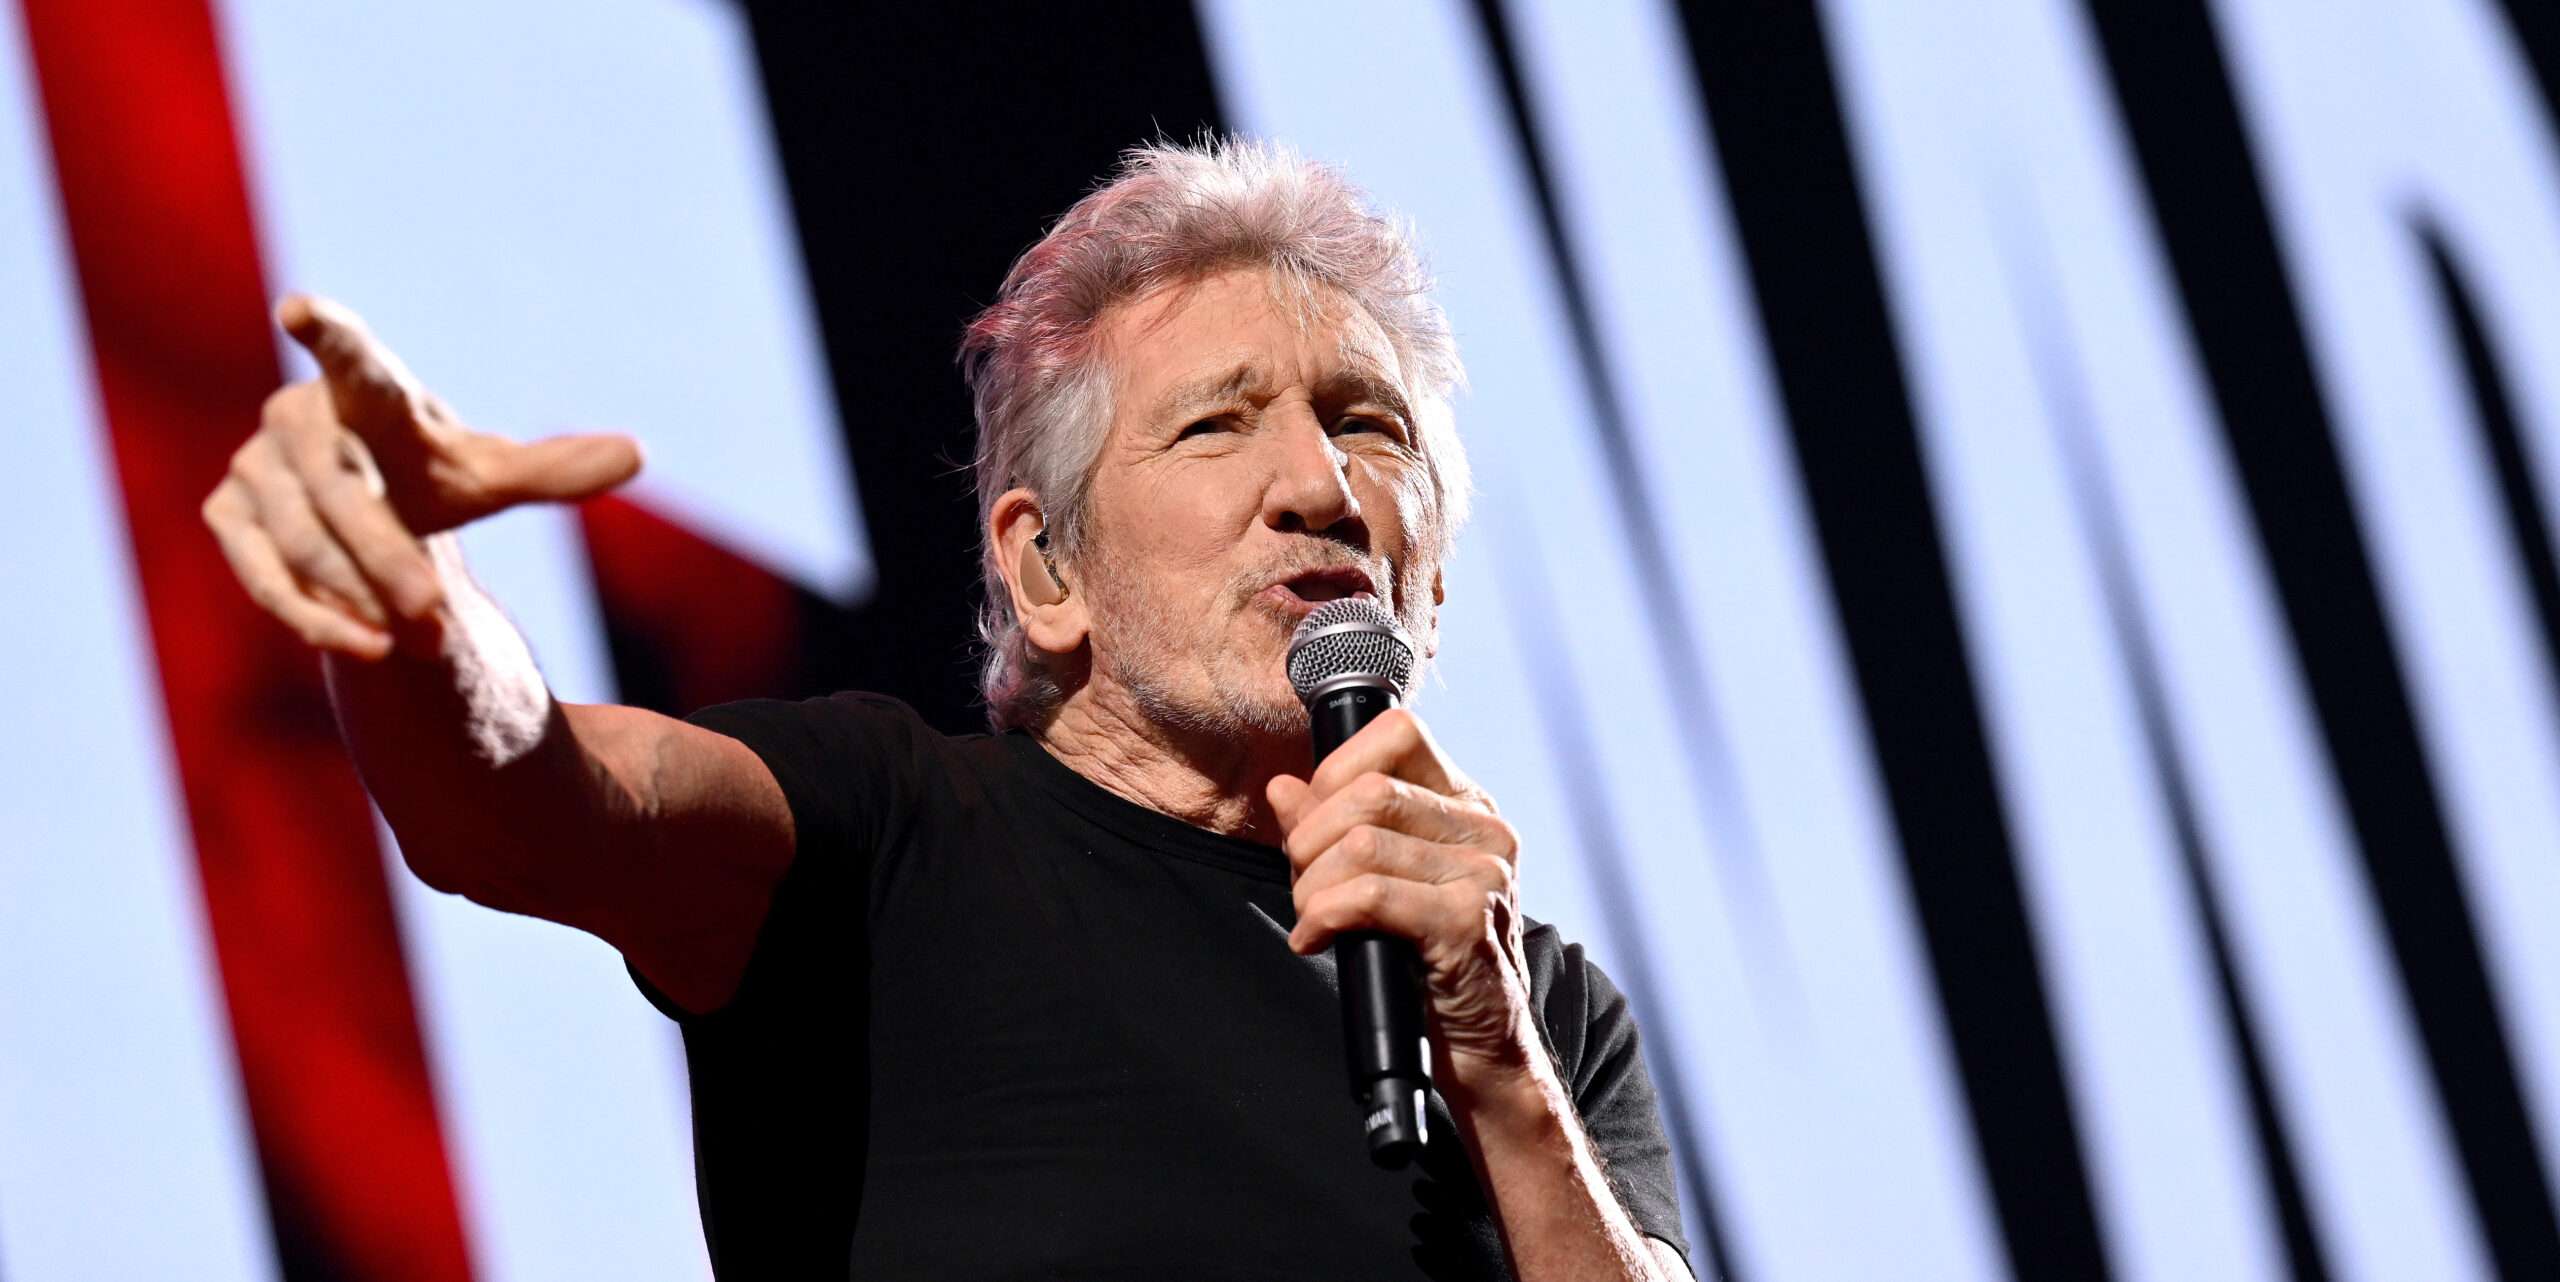 German Police Investigate Roger Waters Over Concert Wardrobe